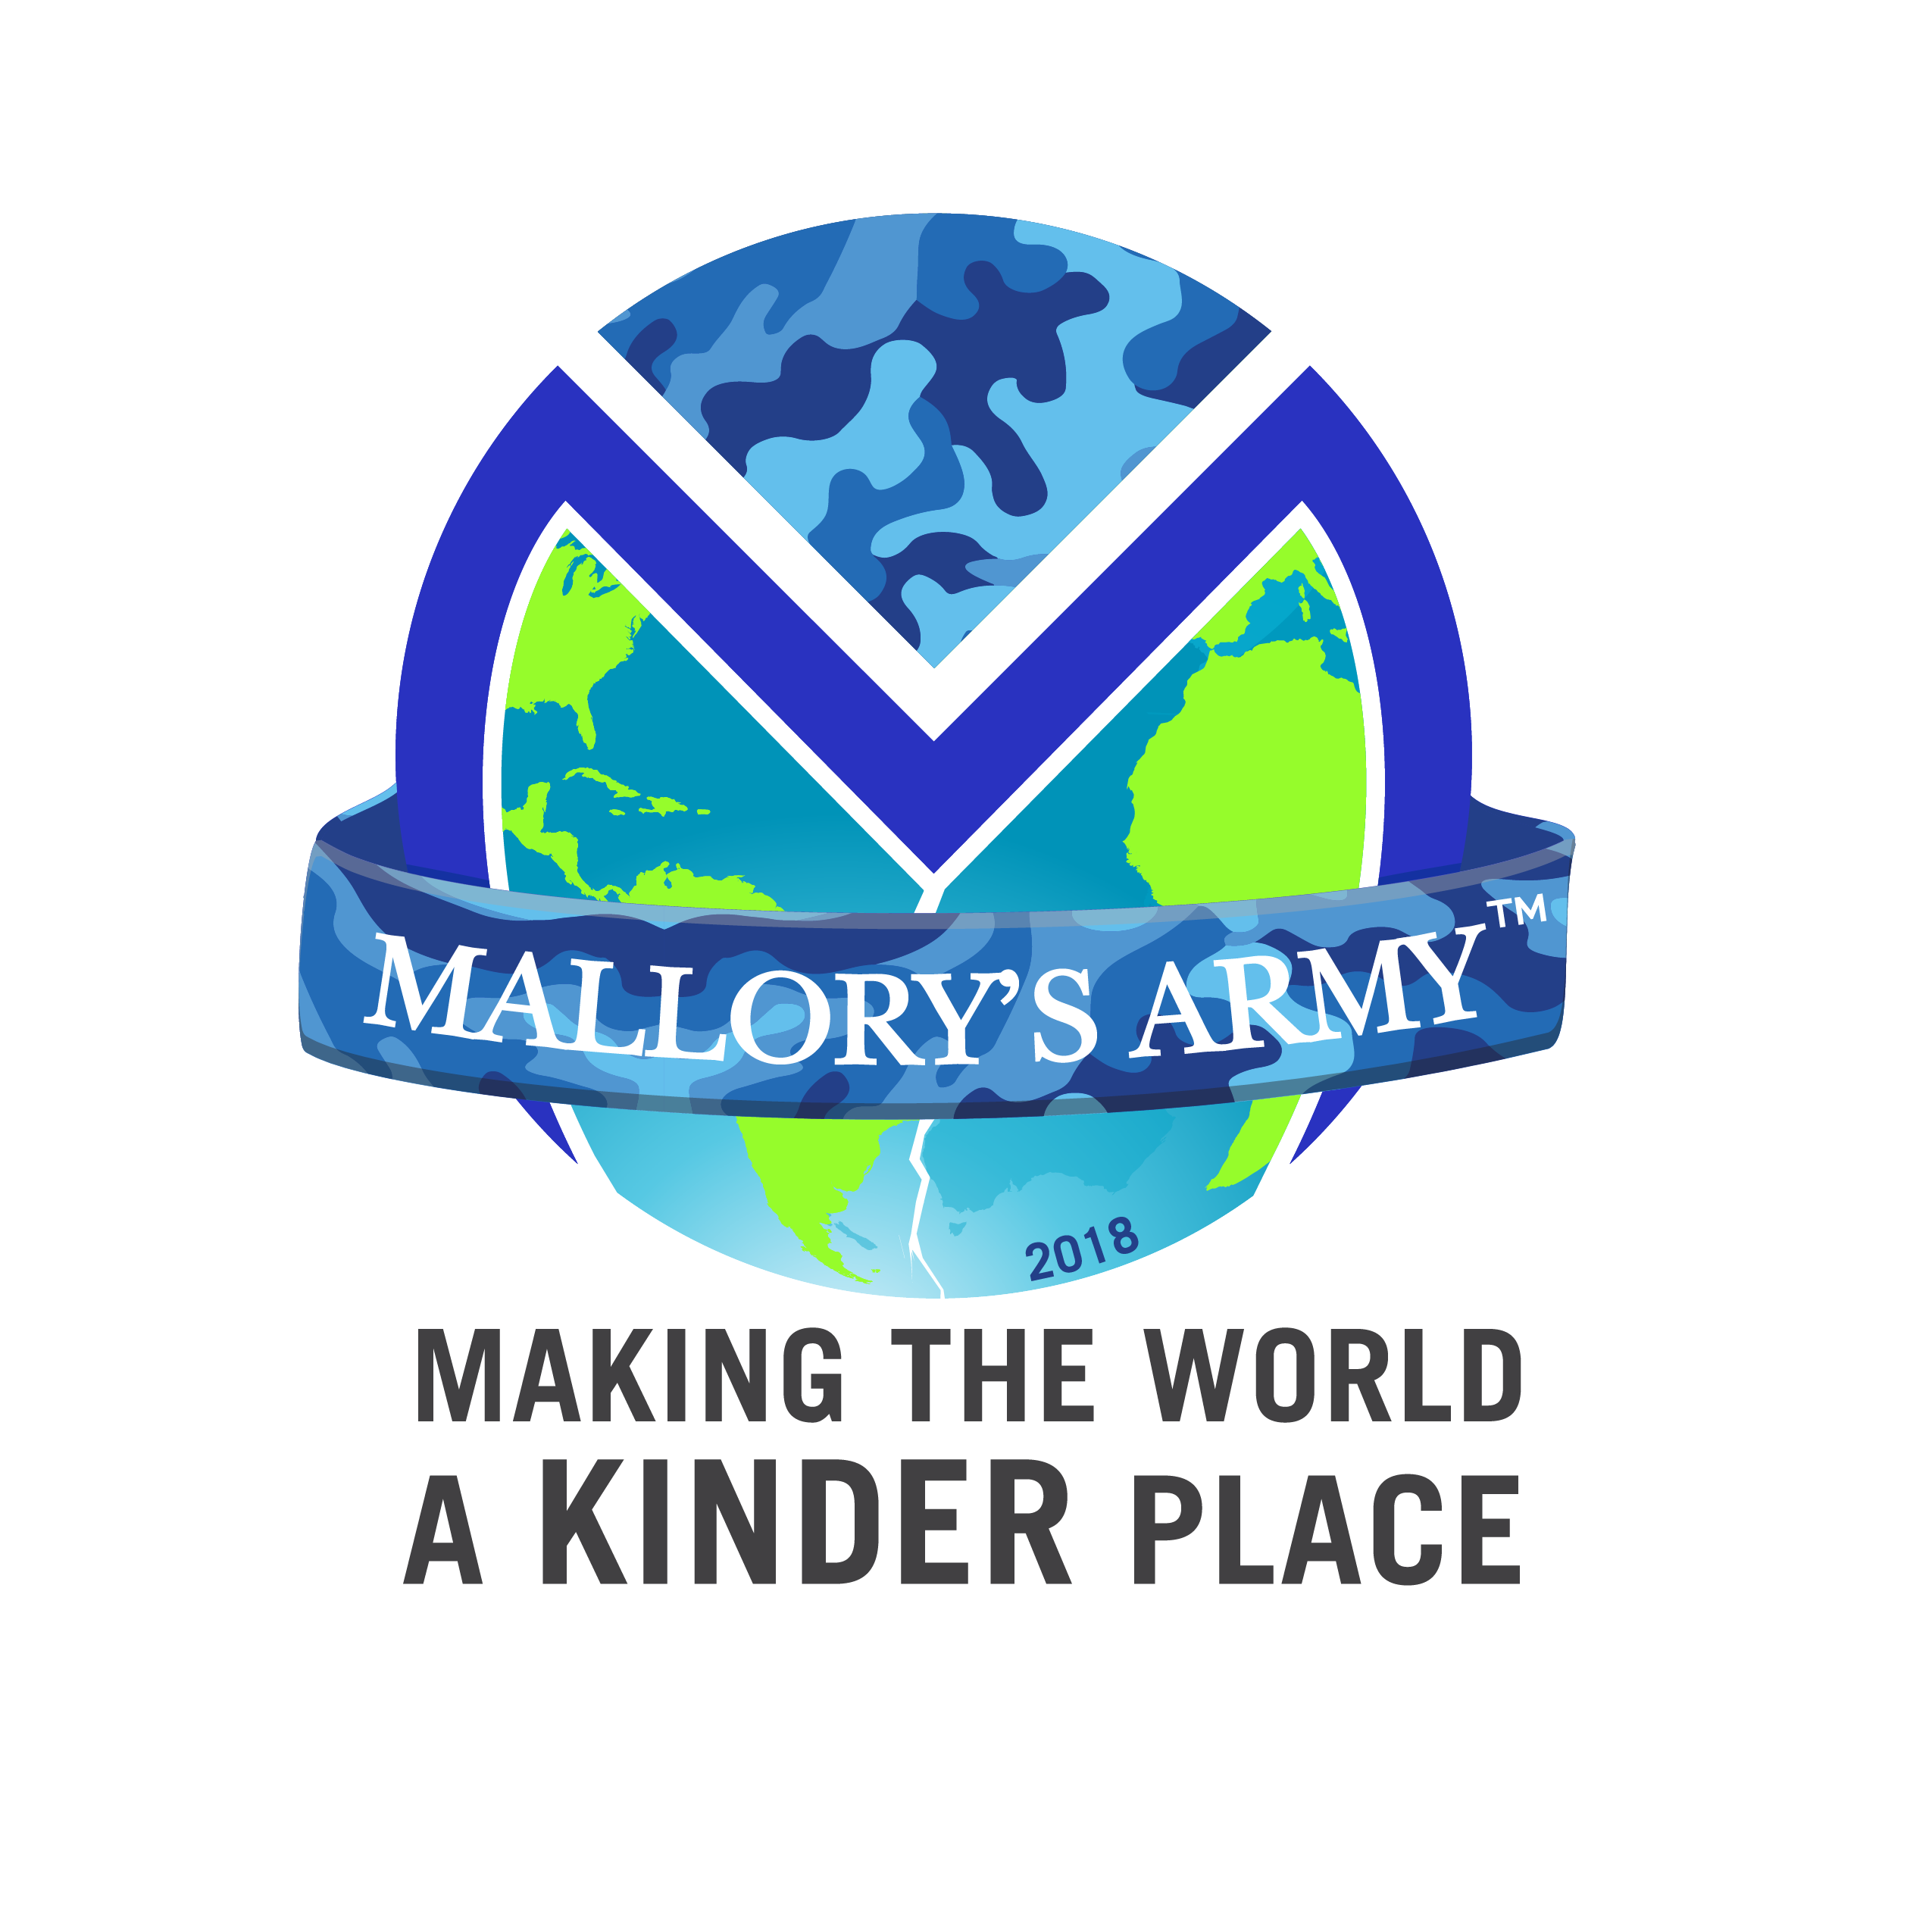 Mallory's Army